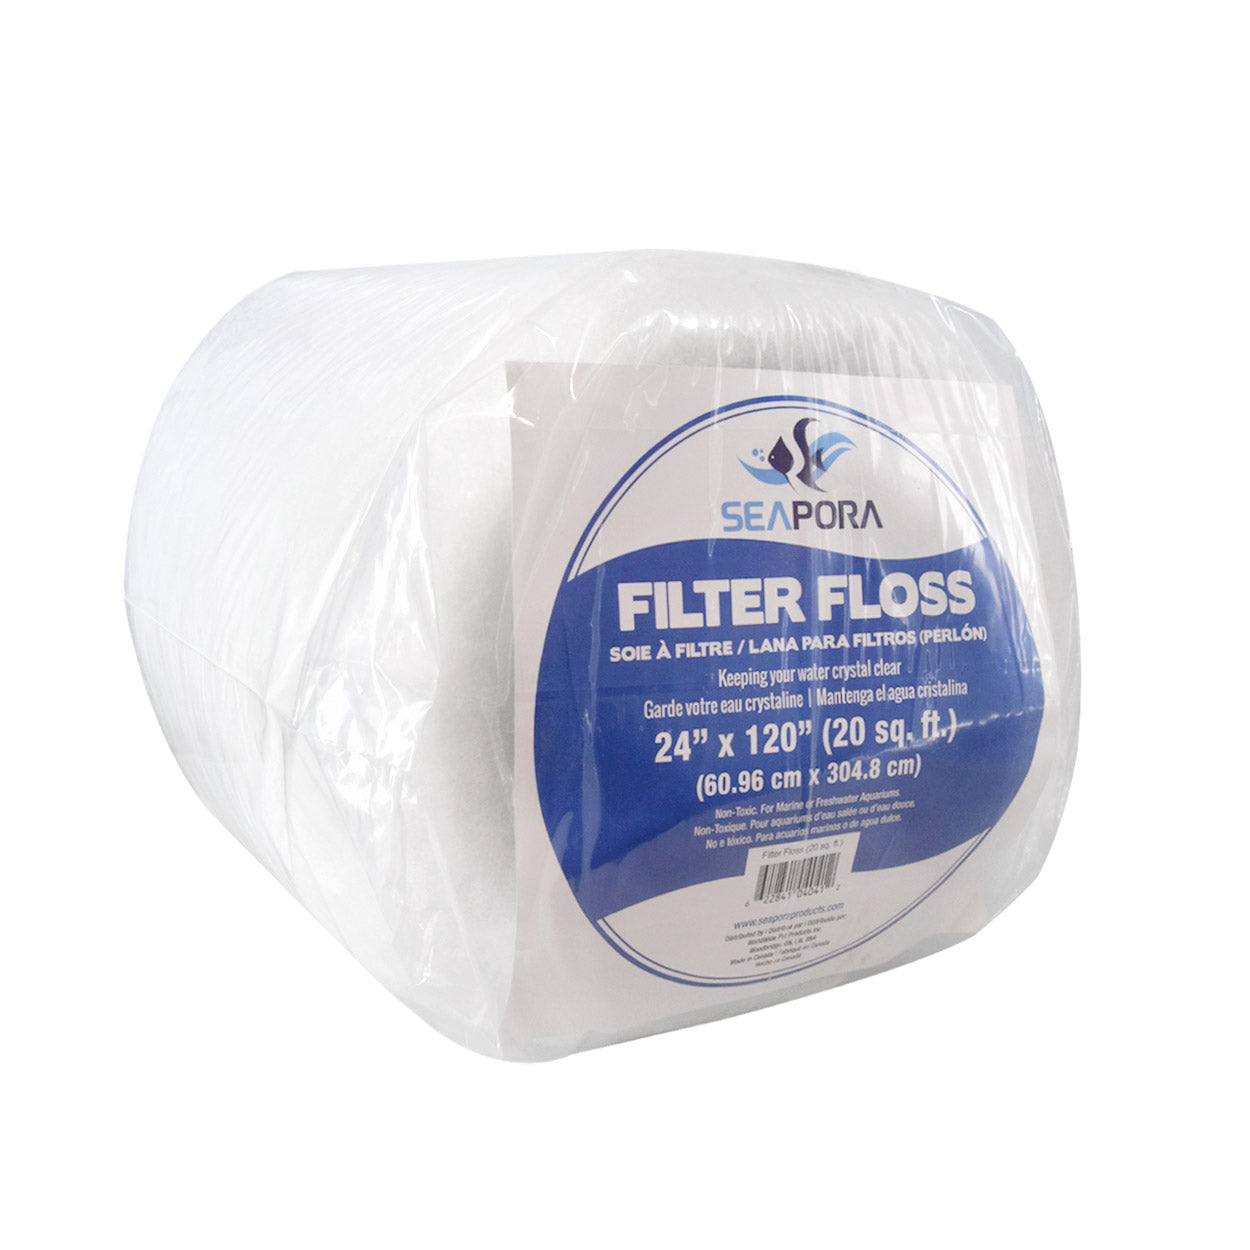 Aquarium Filter Pad Aquarium Filter Media Roll for Crystal Clear Water - Filter Floss for Fish Tank Filters, Size: 120